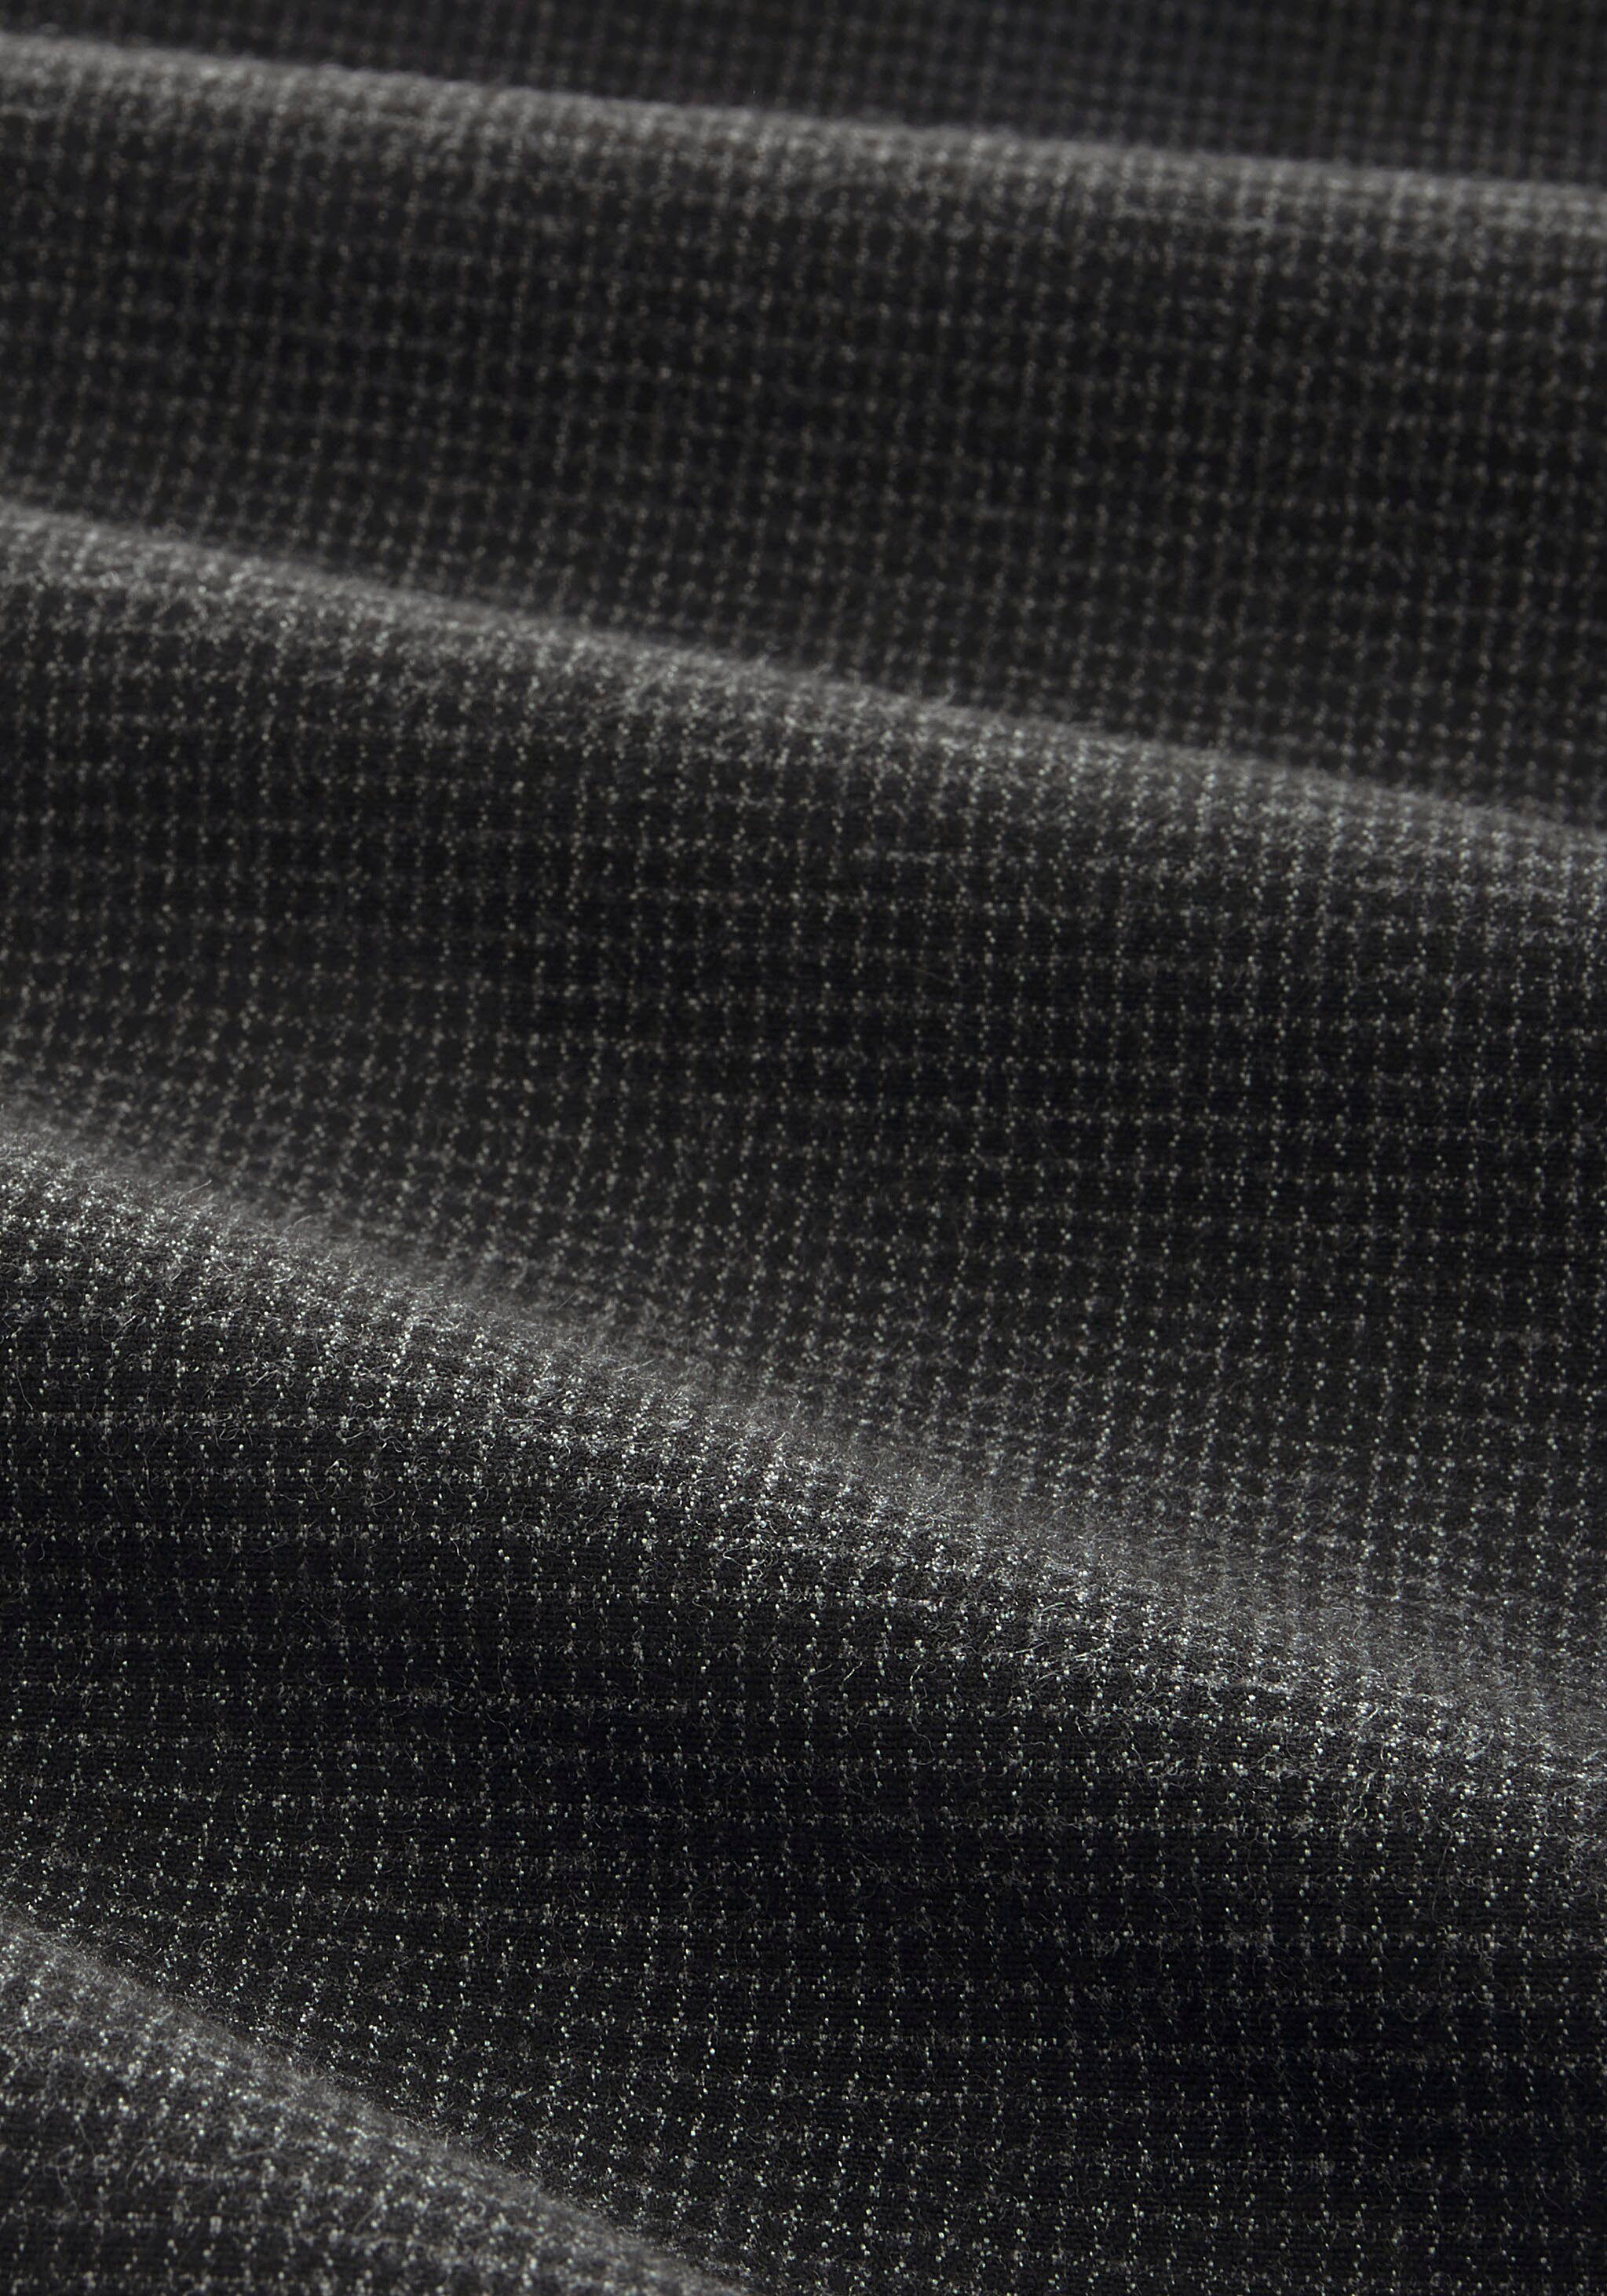 black/grey mit gepflegter TOM Waffelstruktur Optik Strukturen Pants TAILOR verschiedenen Denim in Jogger